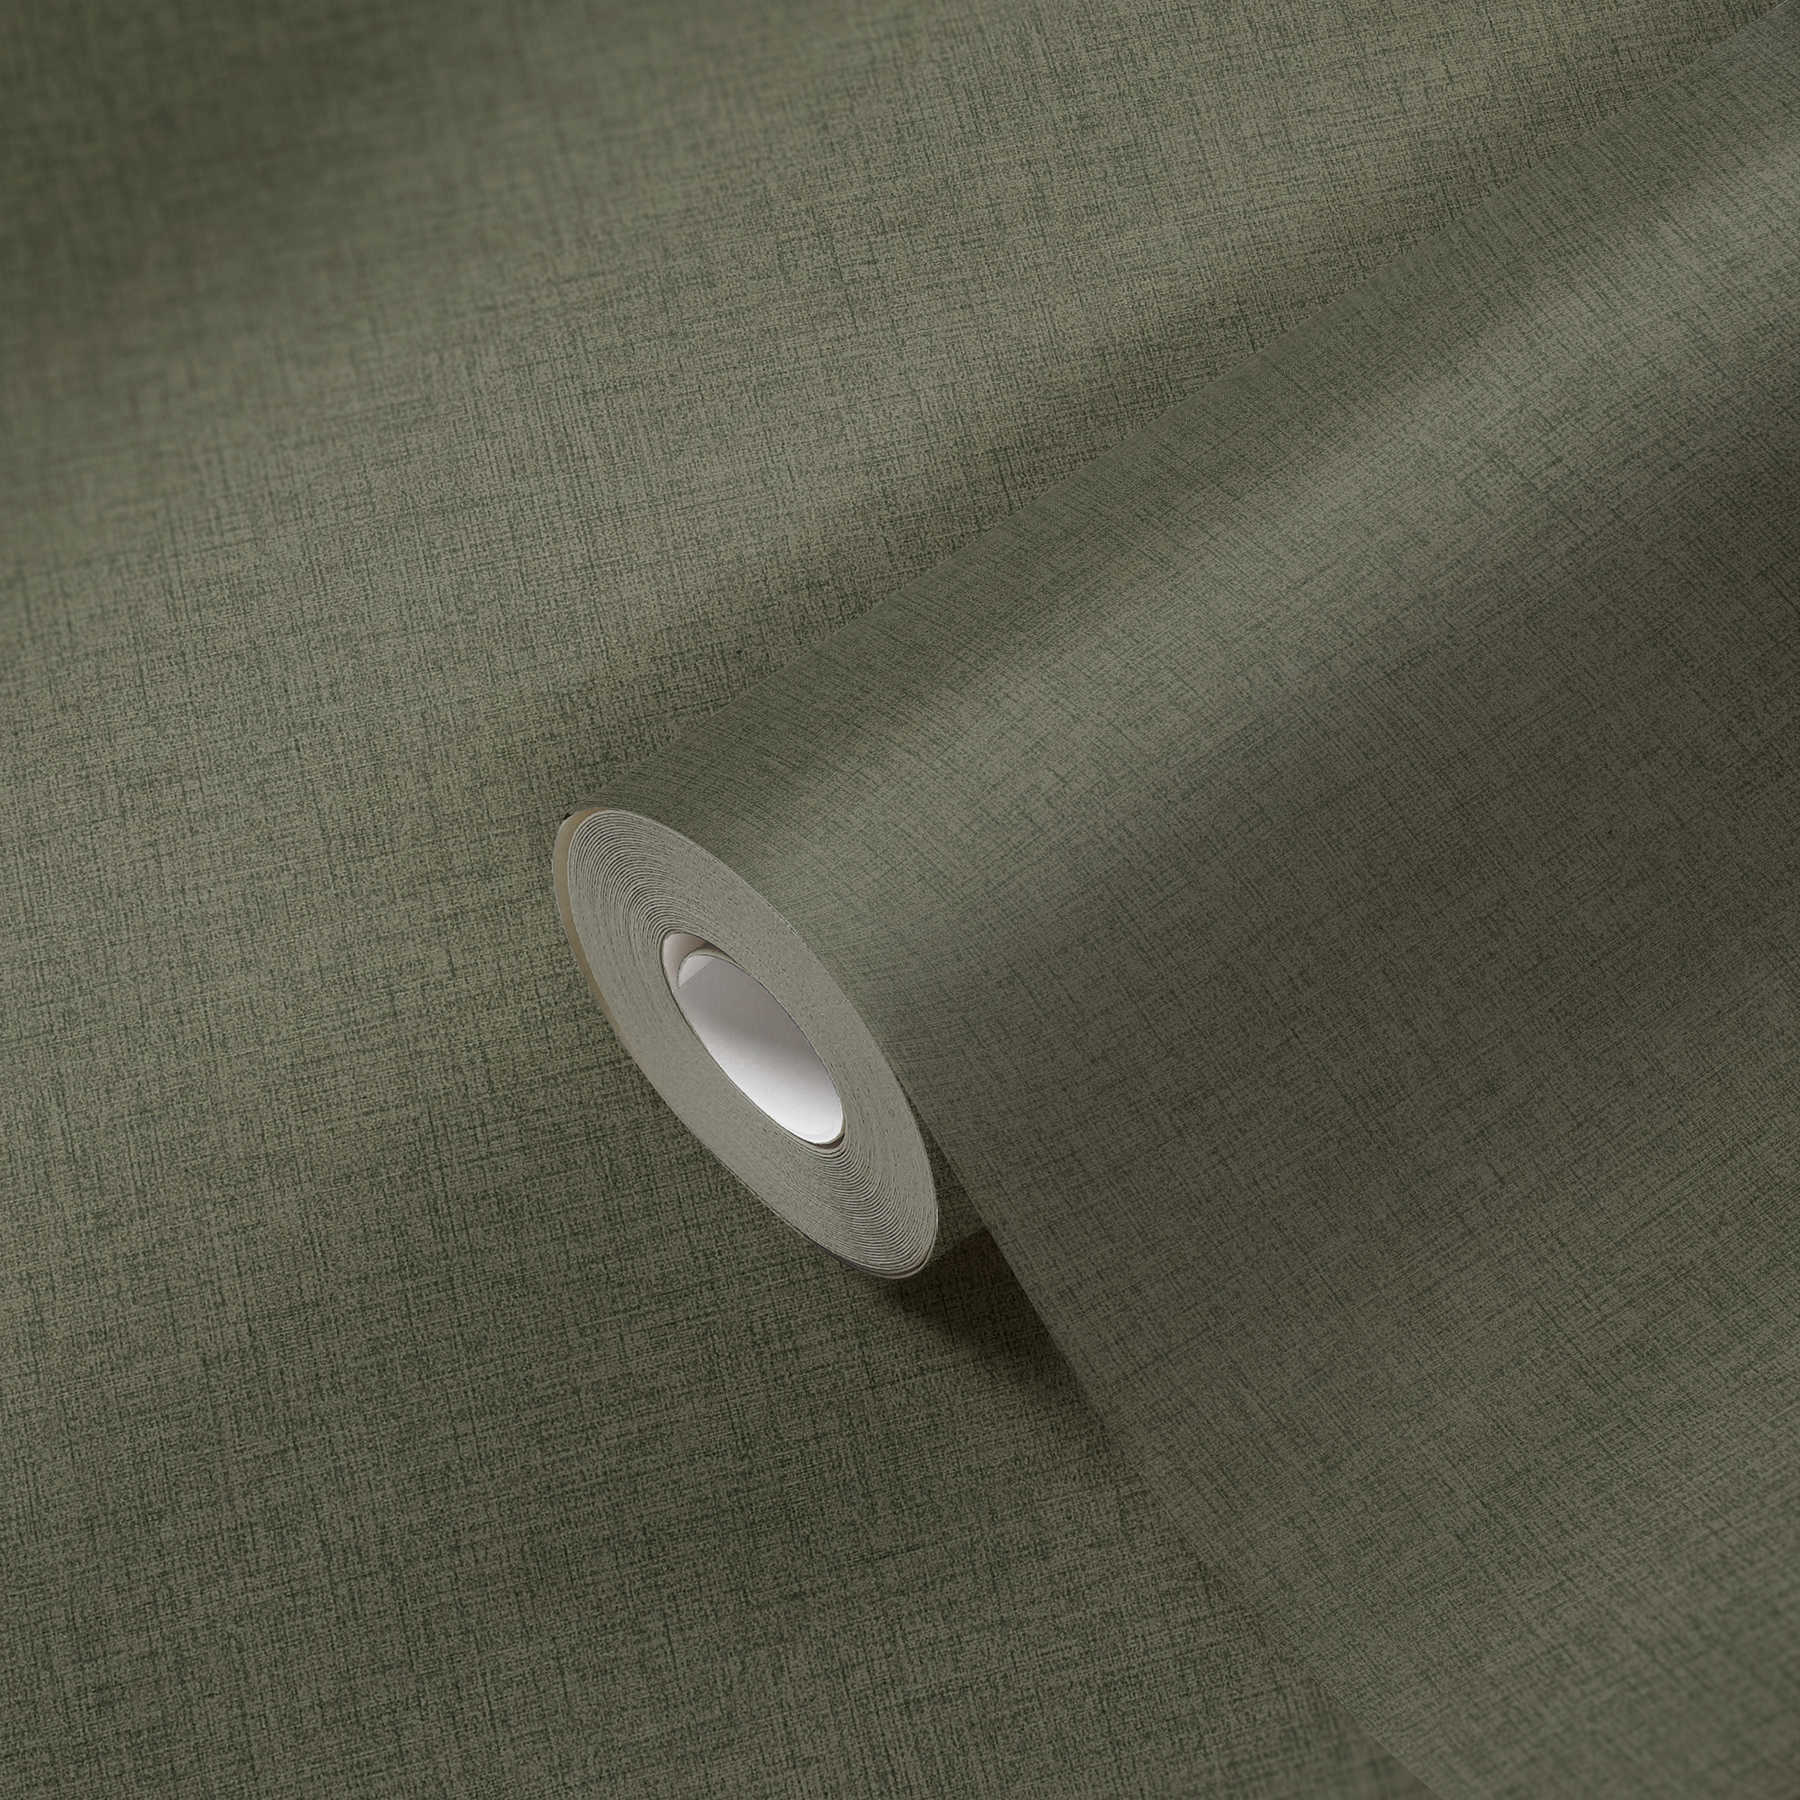             Papel pintado no tejido liso con aspecto textil - verde
        